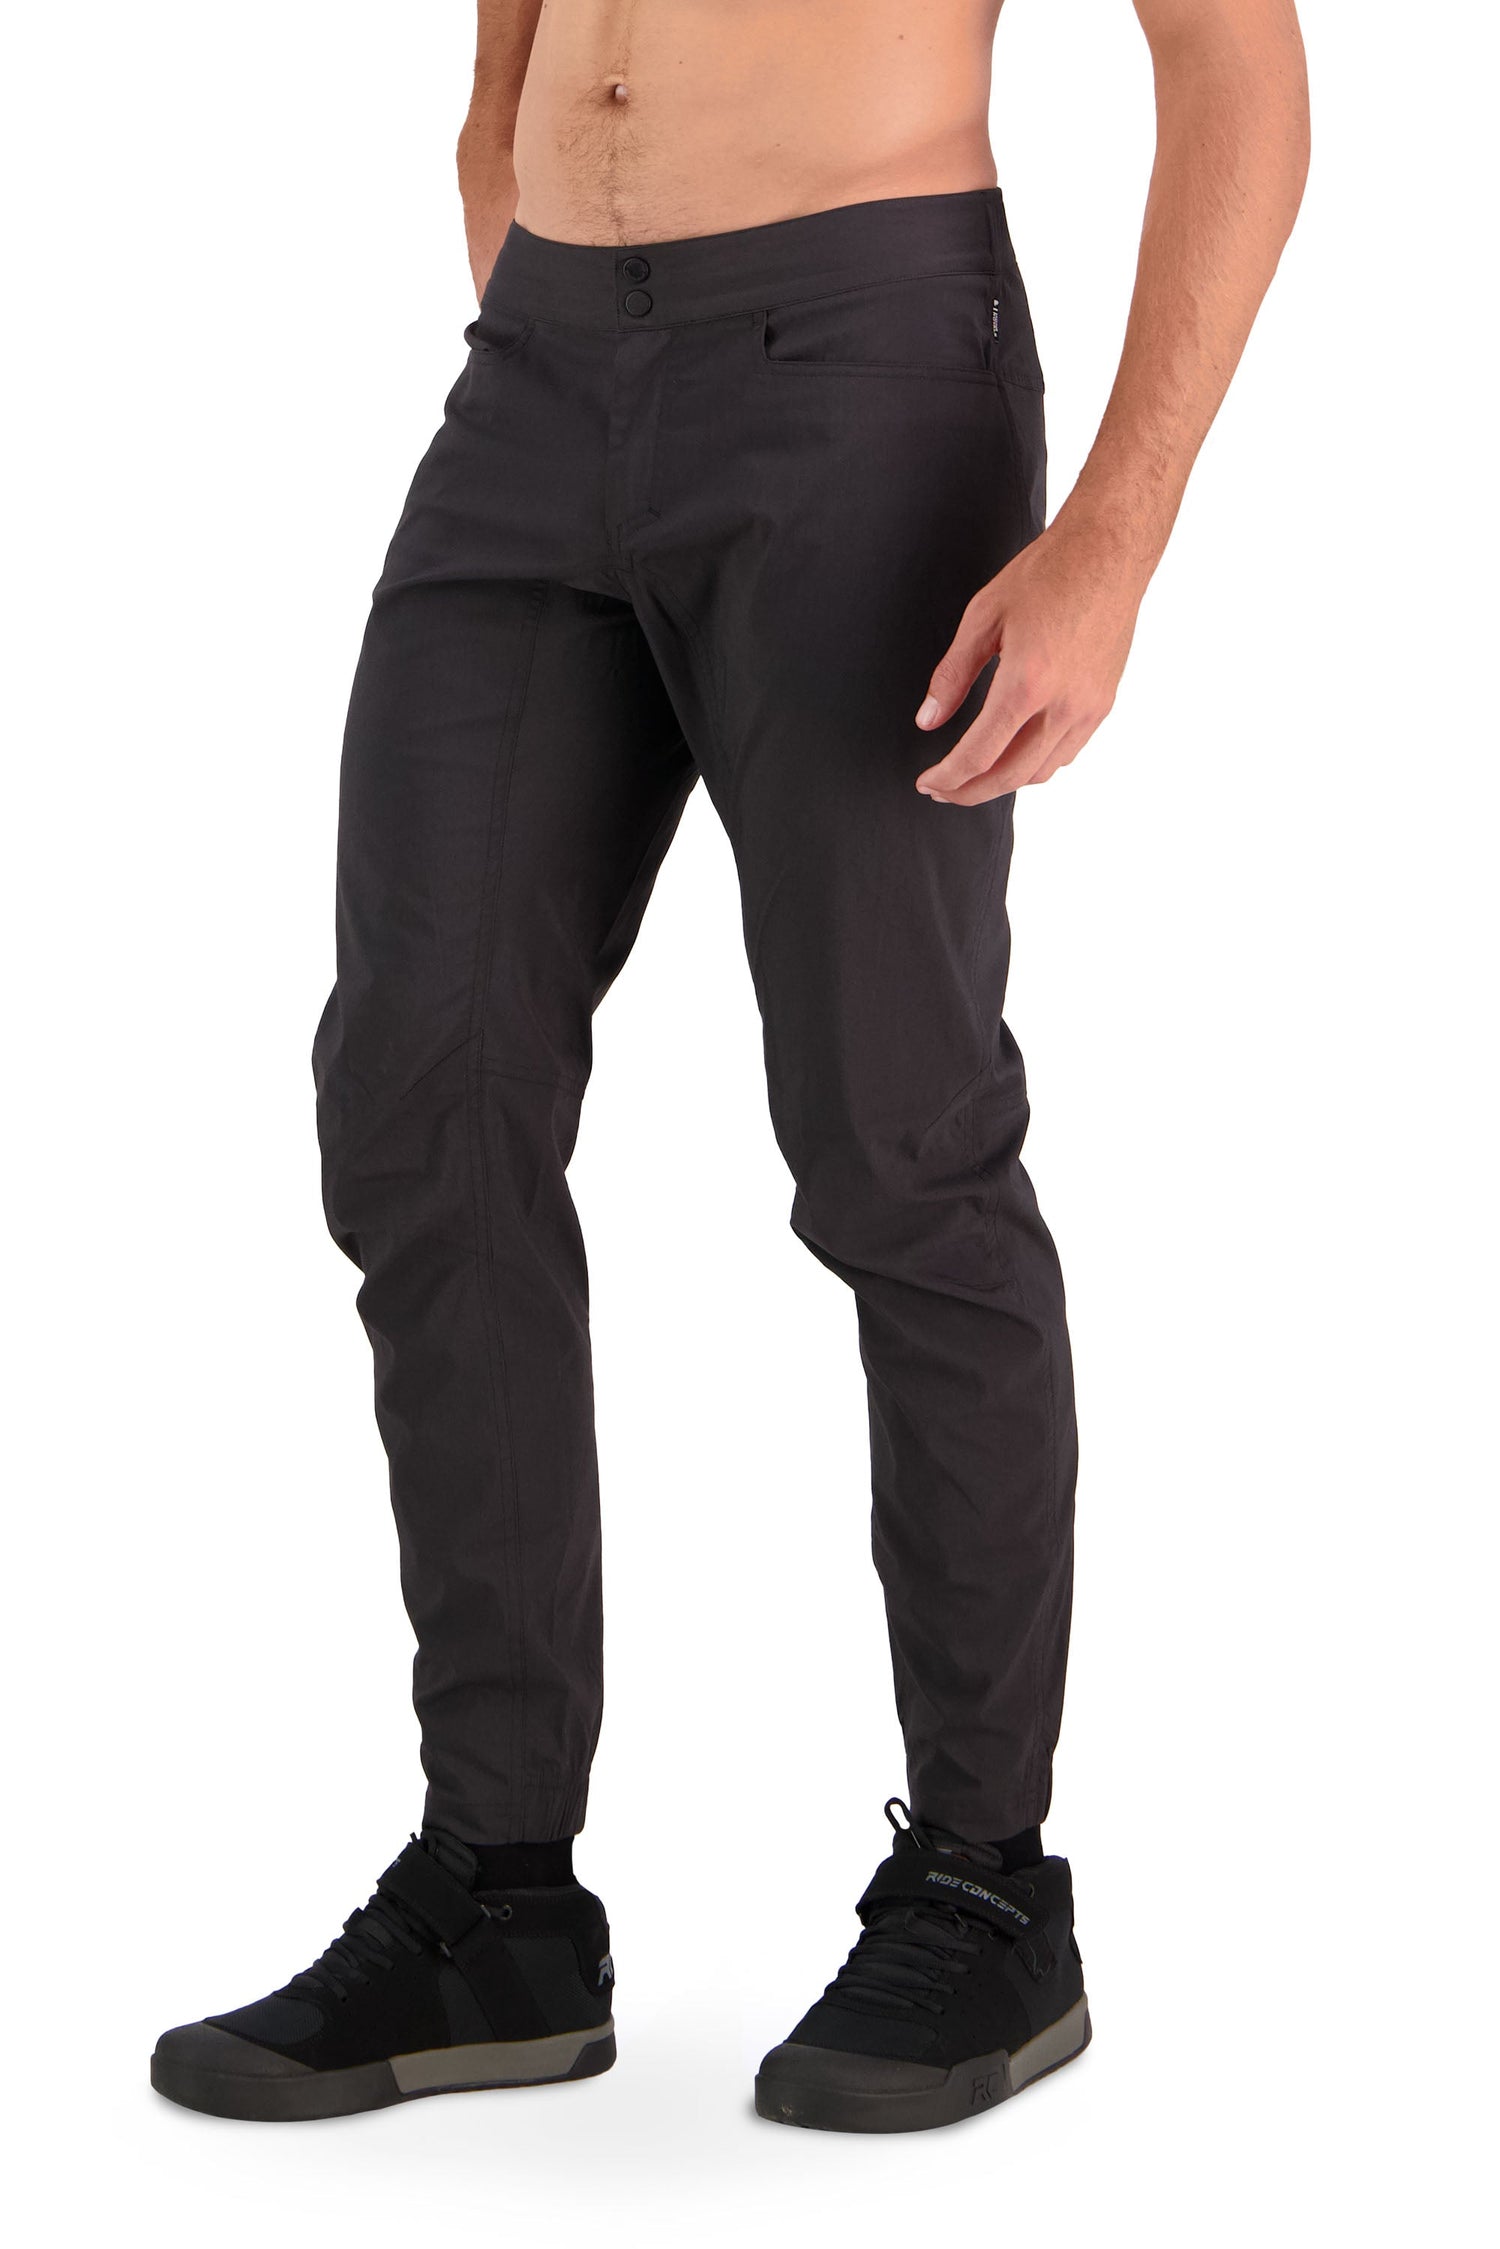 Mons Royale M's Virage Pants - Recycled Polyester & Merino Black Pants